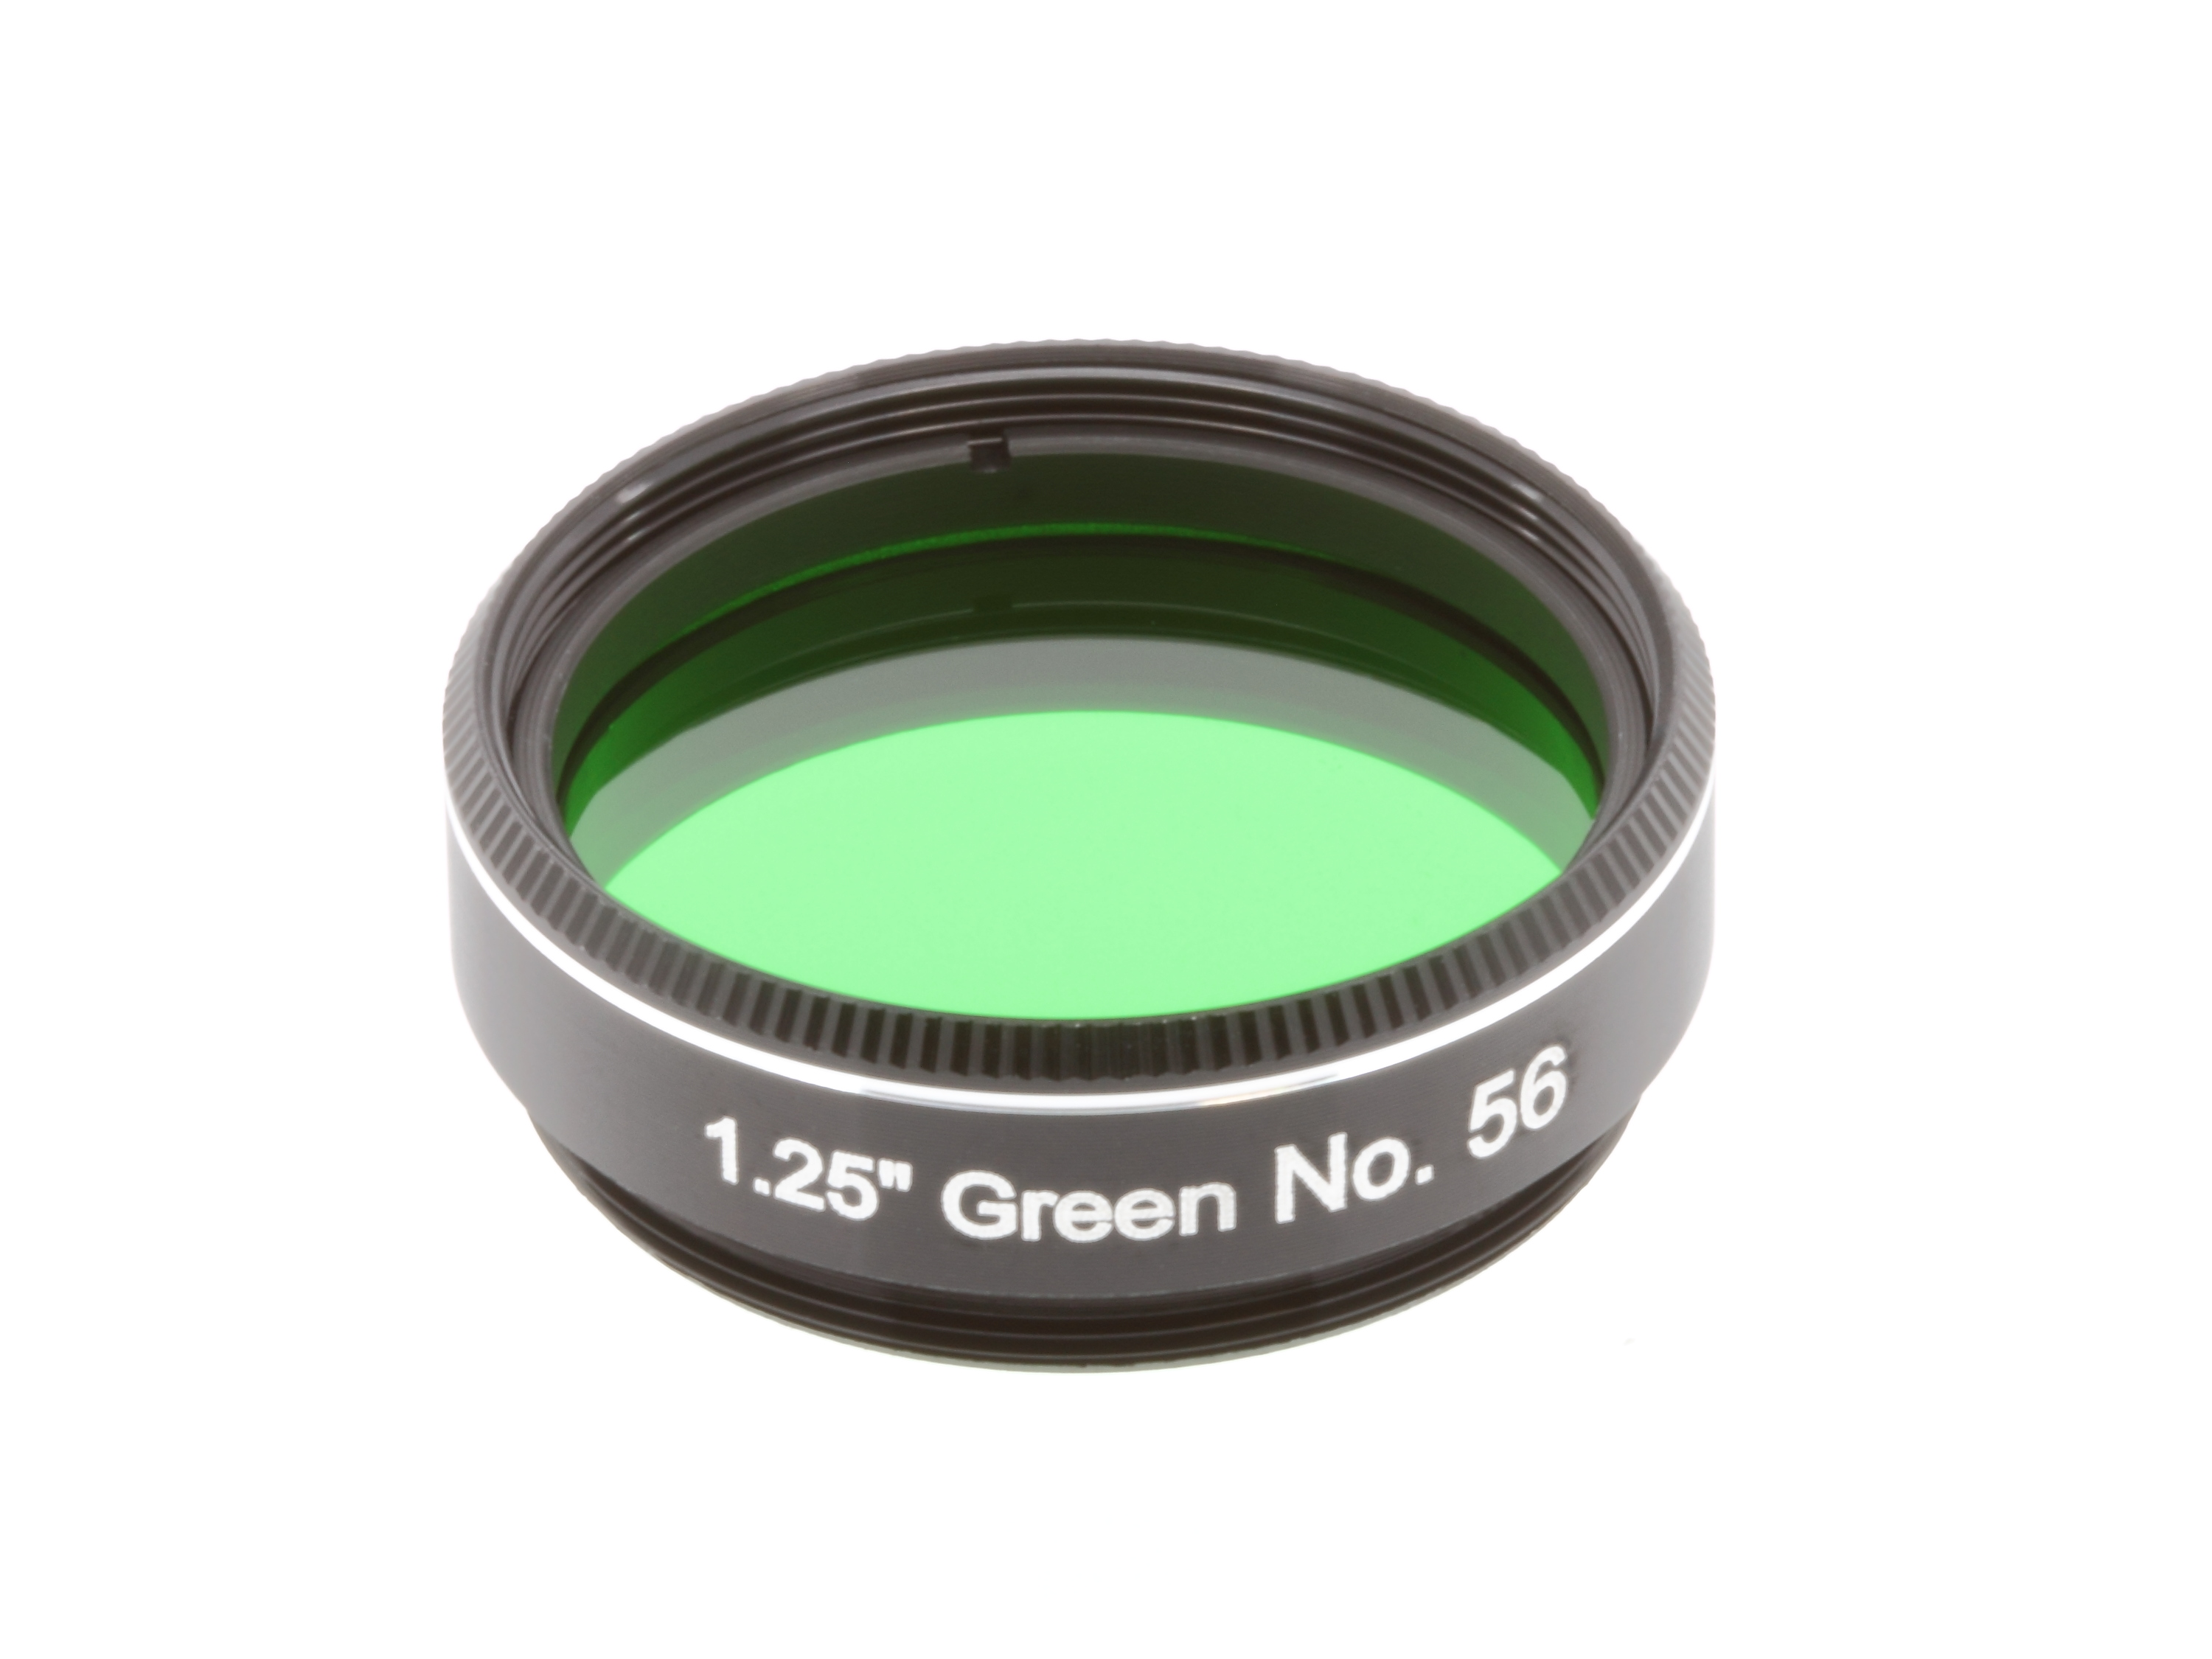 EXPLORE SCIENTIFIC Filter 1.25" Green No.56 